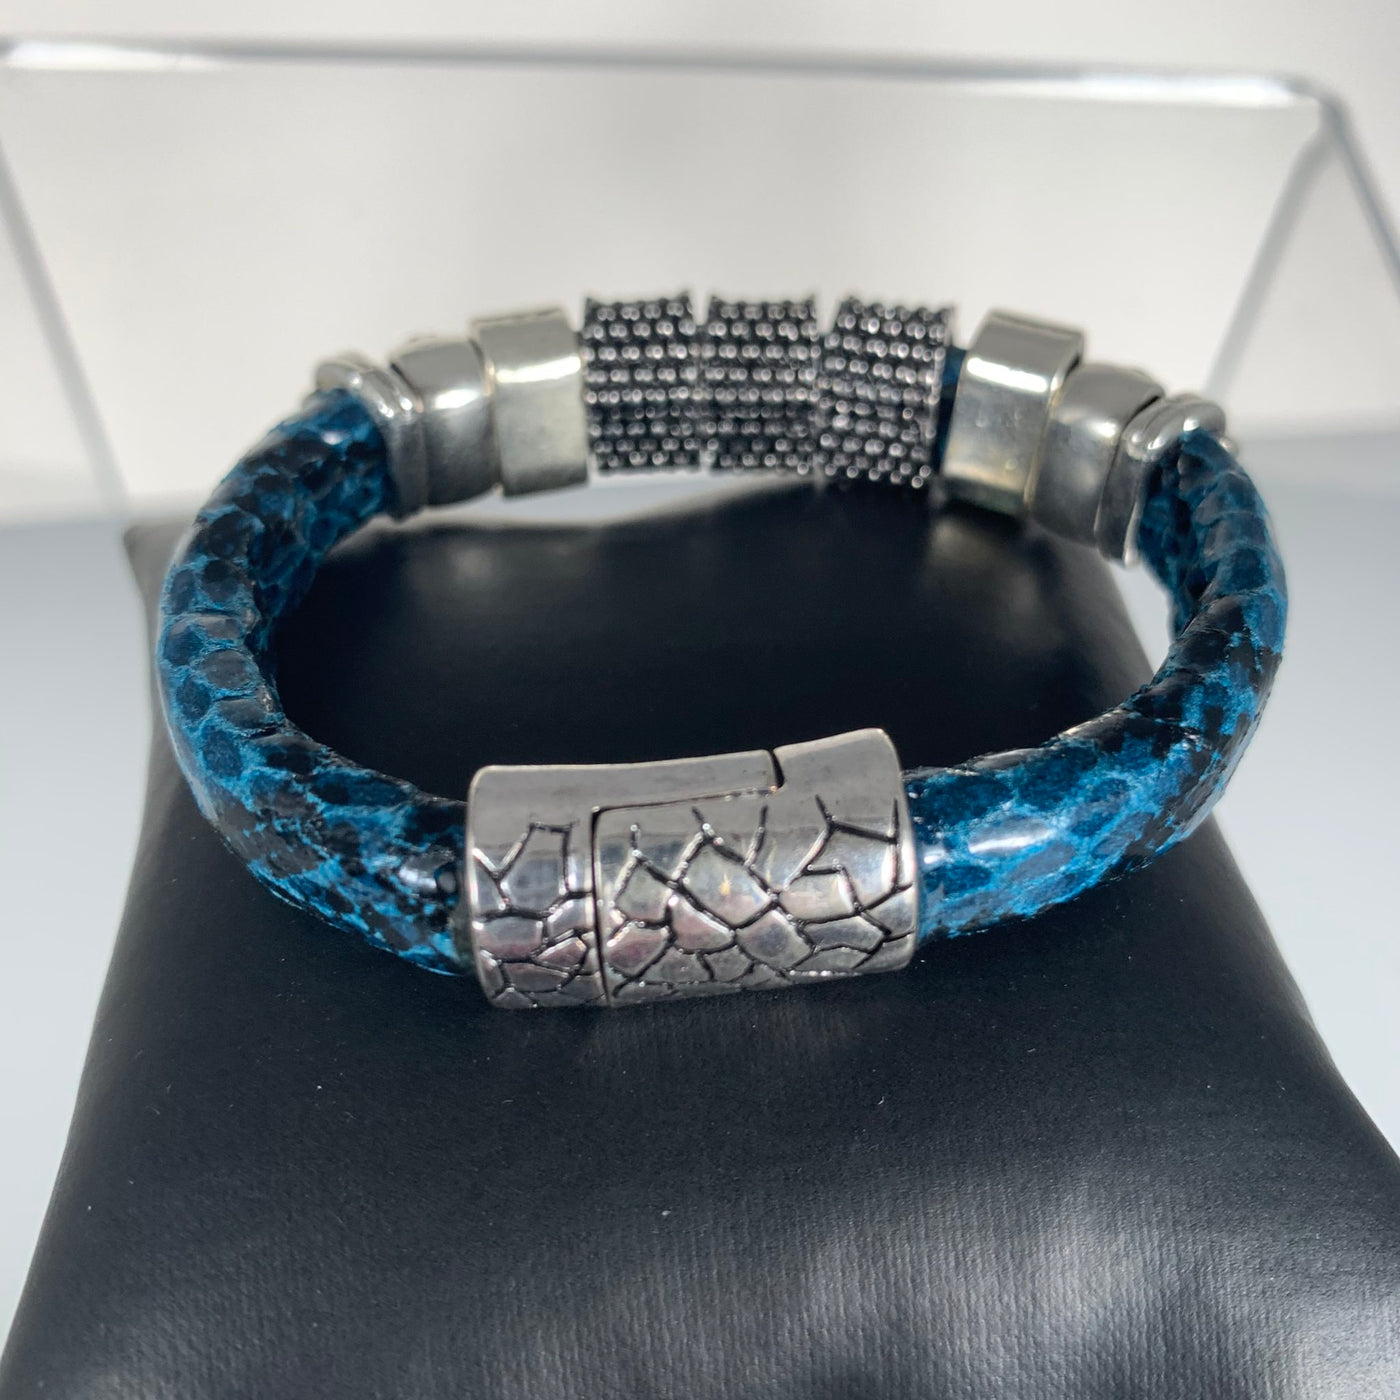 Blue Faux Snake Skin Band Bracelet Featuring SPARKS